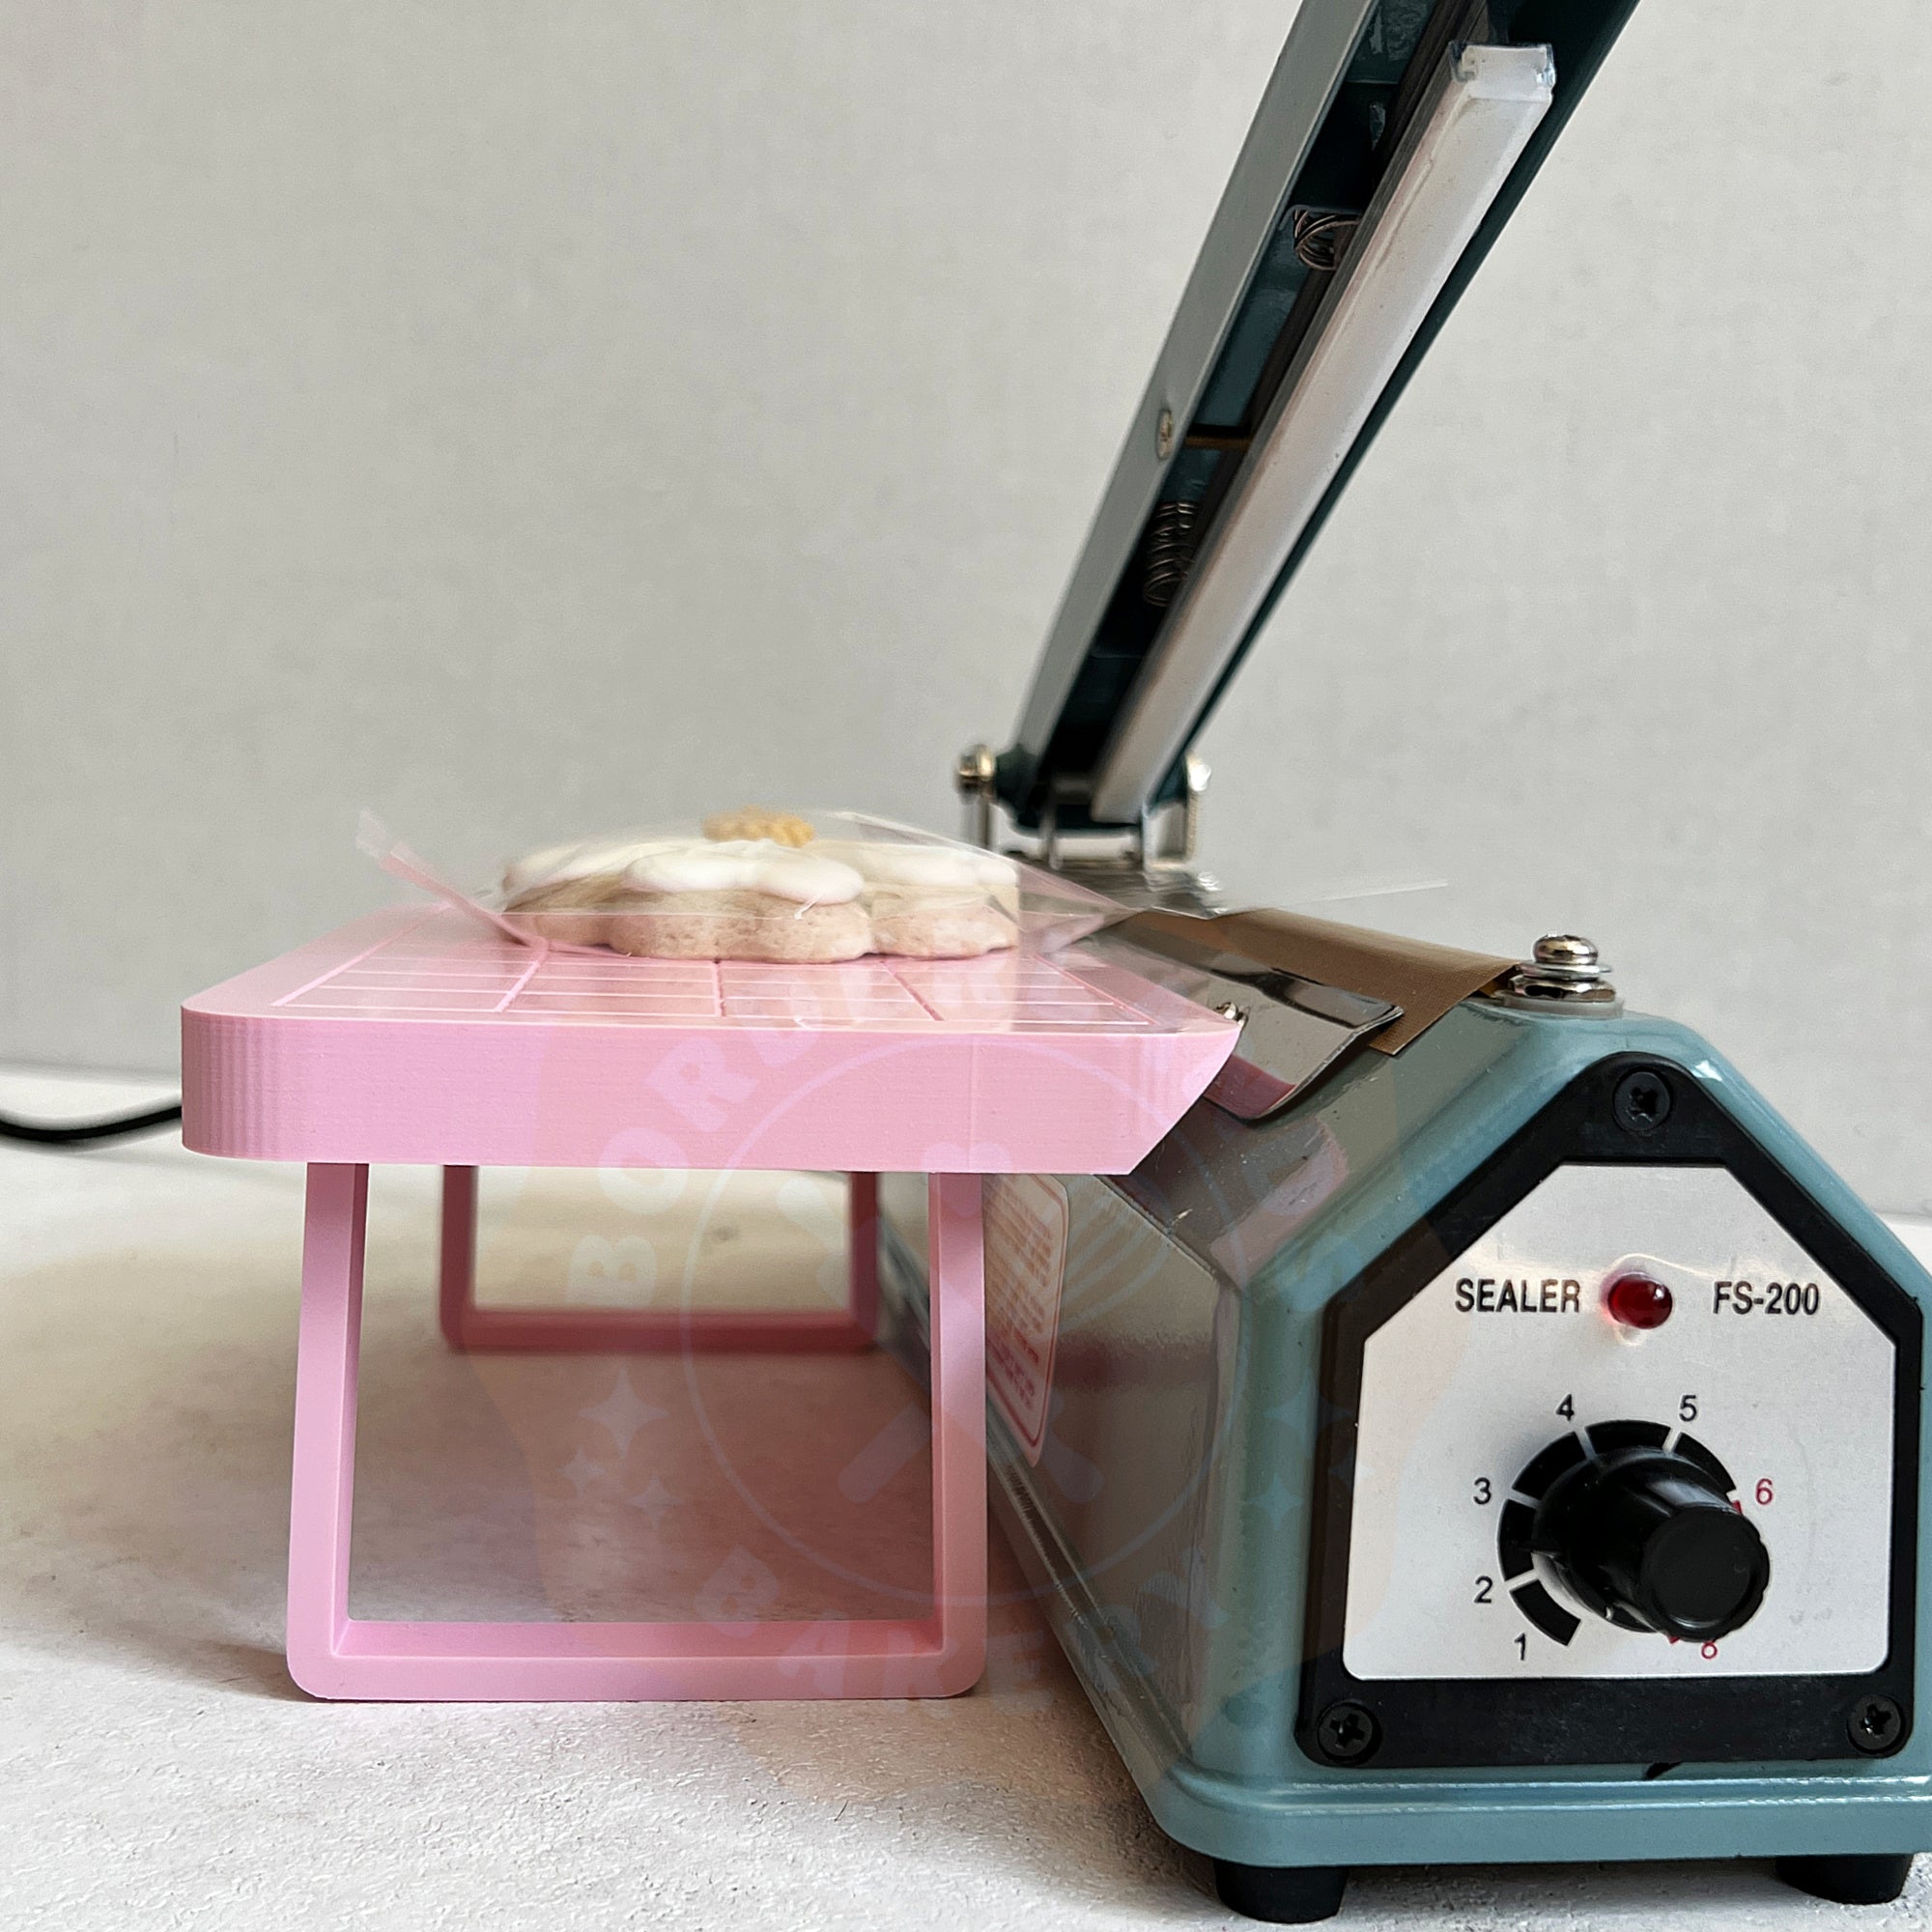 Heat Sealer Table by Kiburz Cookies